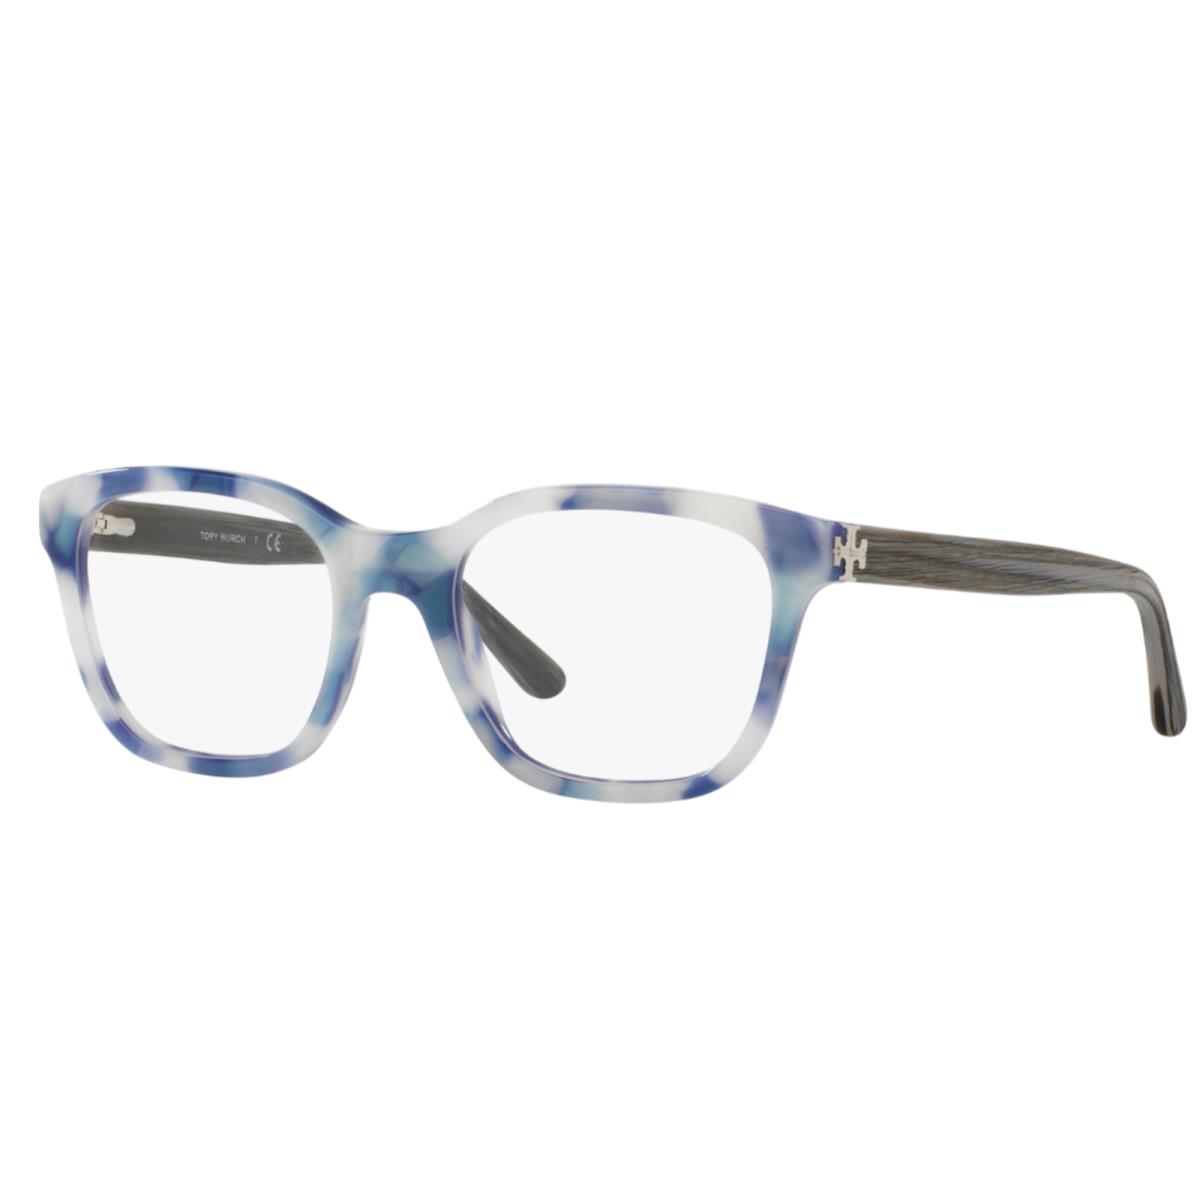 Tory Burch Rx-able Eyeglasses TY 2073 1652 52-19 Blue White Tortoise Frames